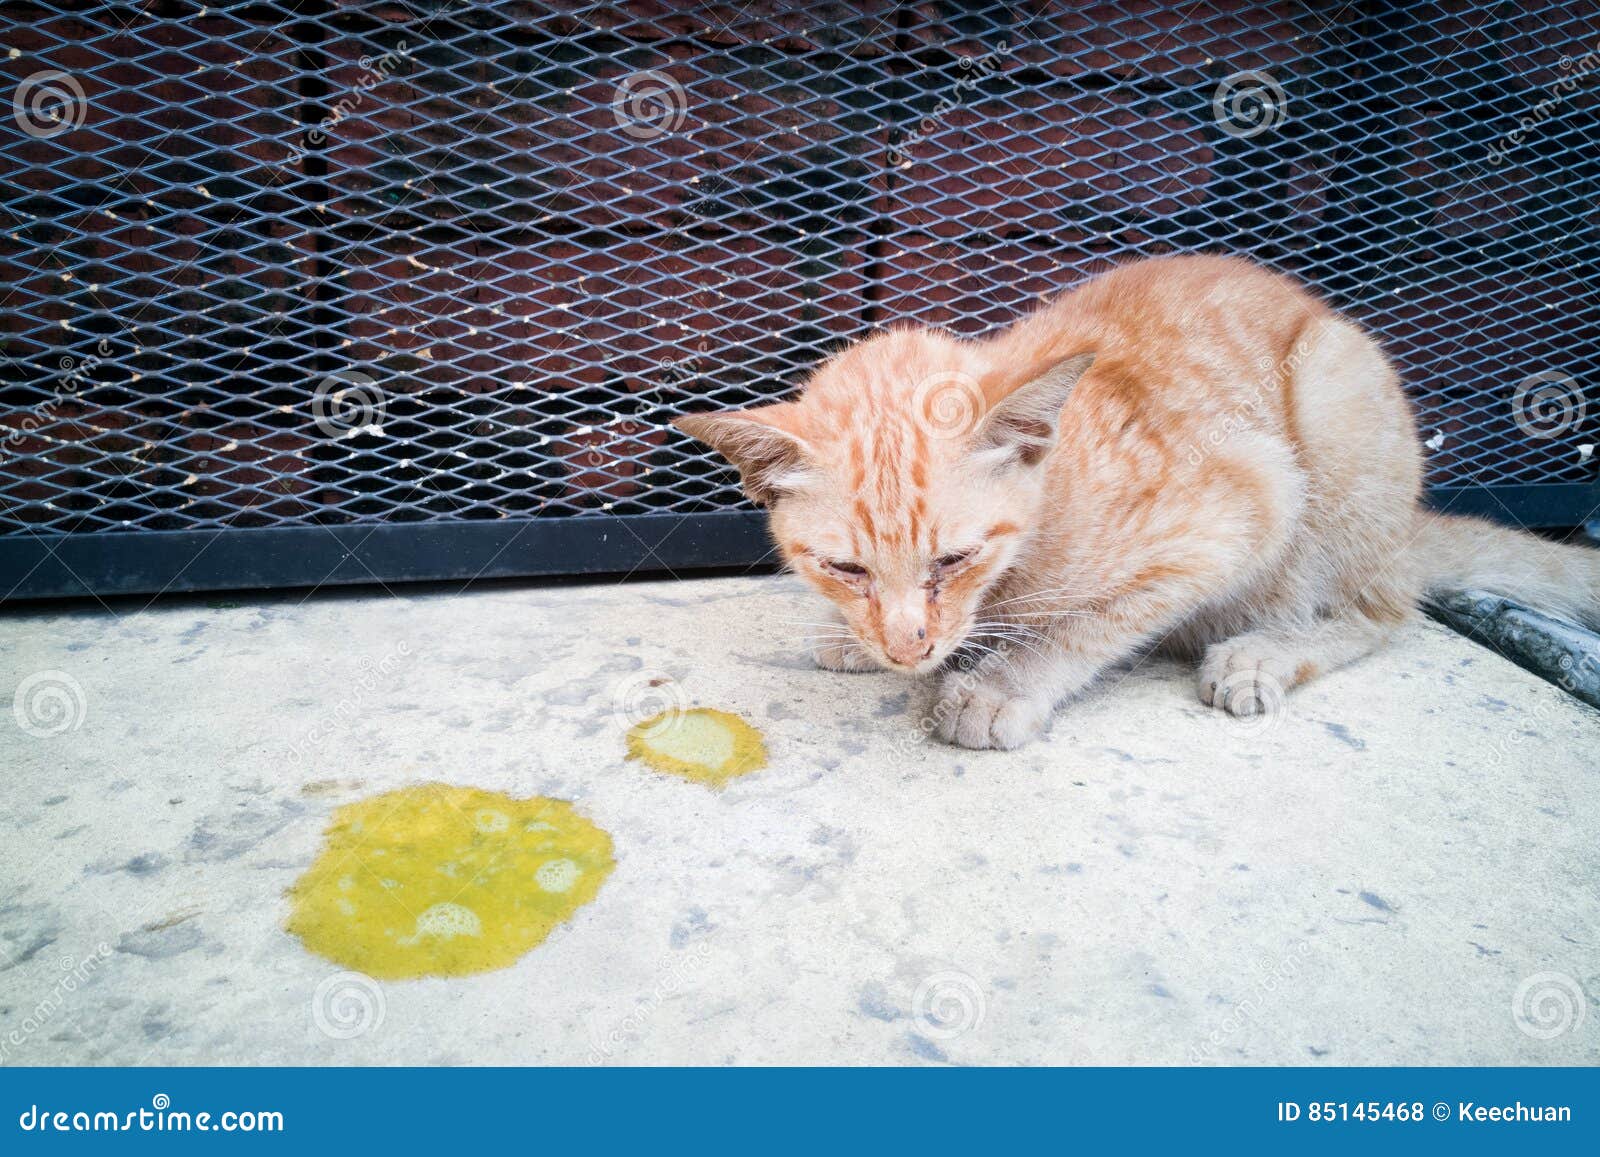 Sick Ill Pet Cat With Vomit On Floor Stock Photo Image of vomit